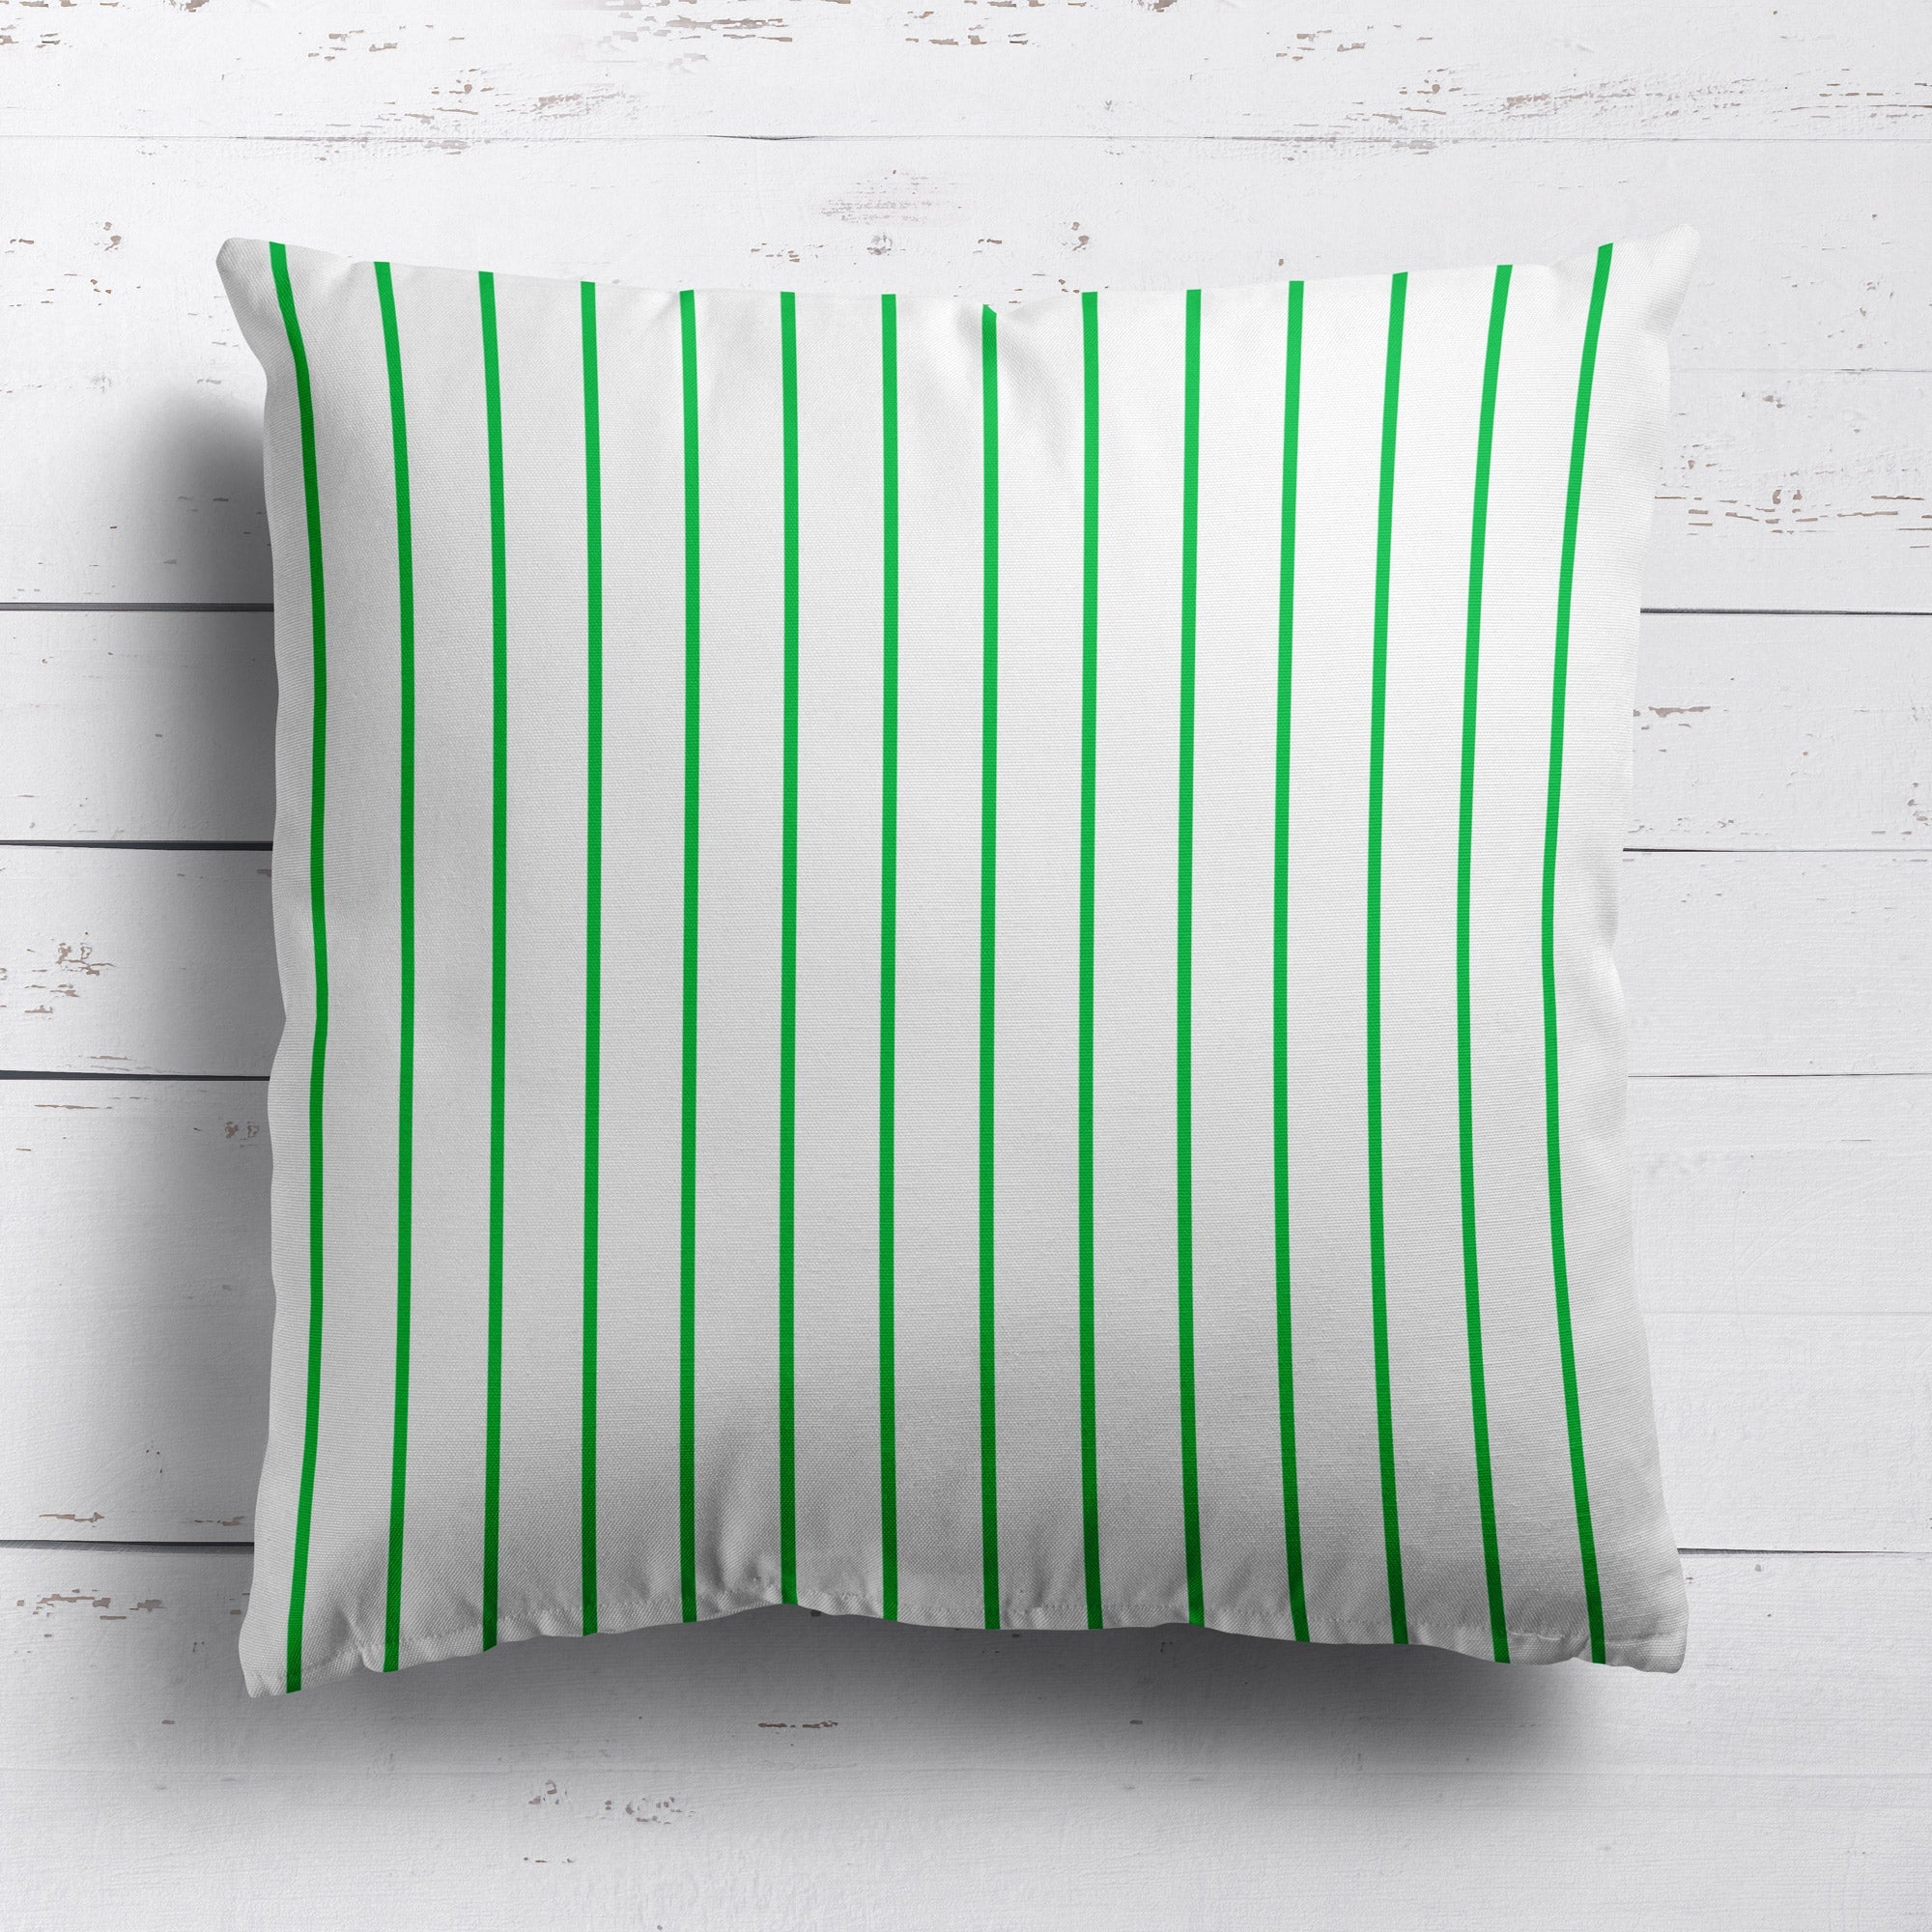 Breton Stripe Fabric - Emerald - Hydrangea Lane Home